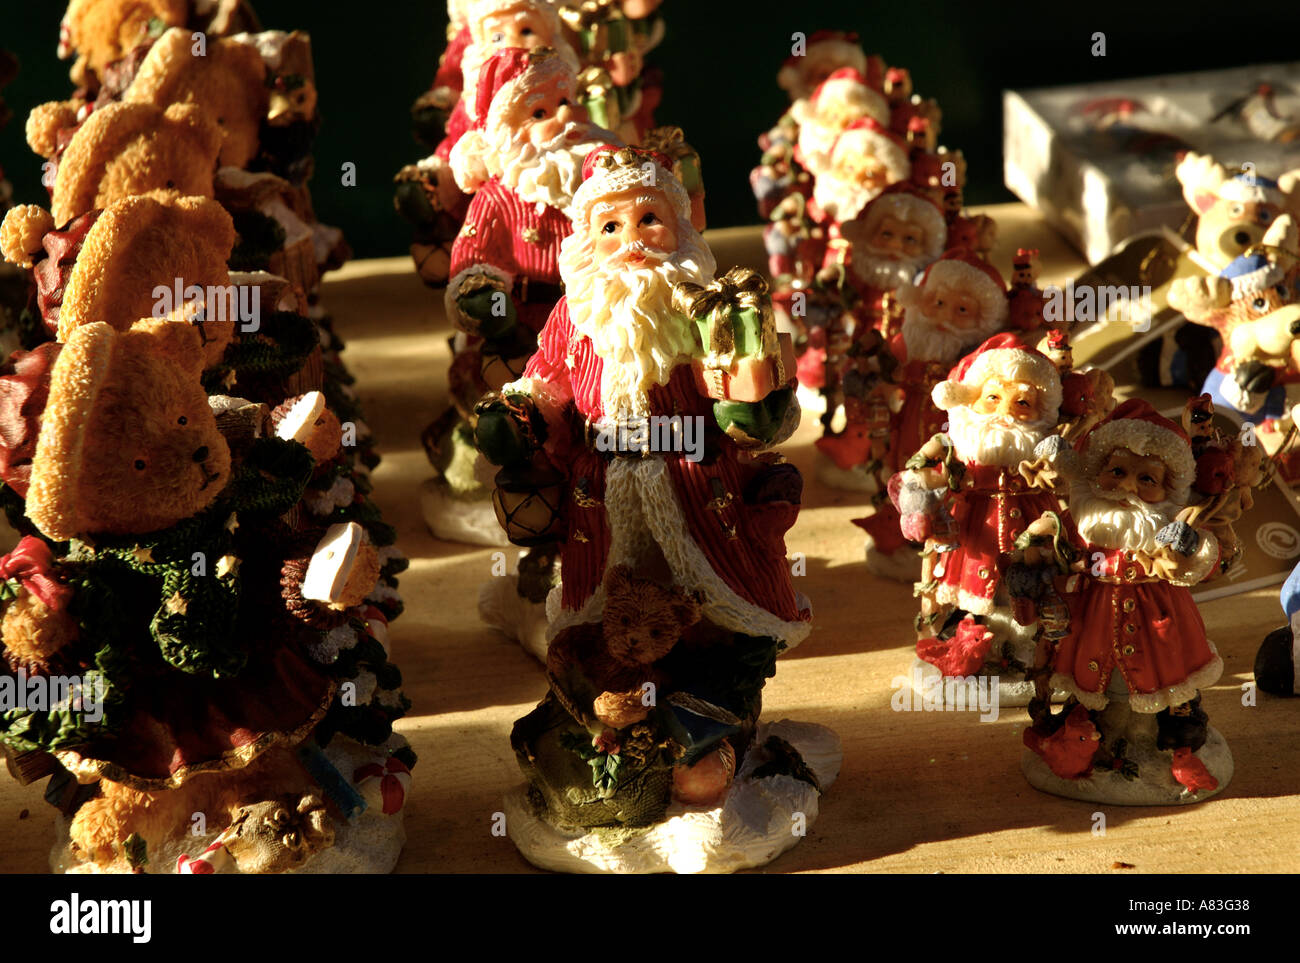 Mercato di Natale (Weihnachtsmarkt), Marienplatz Monaco di Baviera, Germania Foto Stock